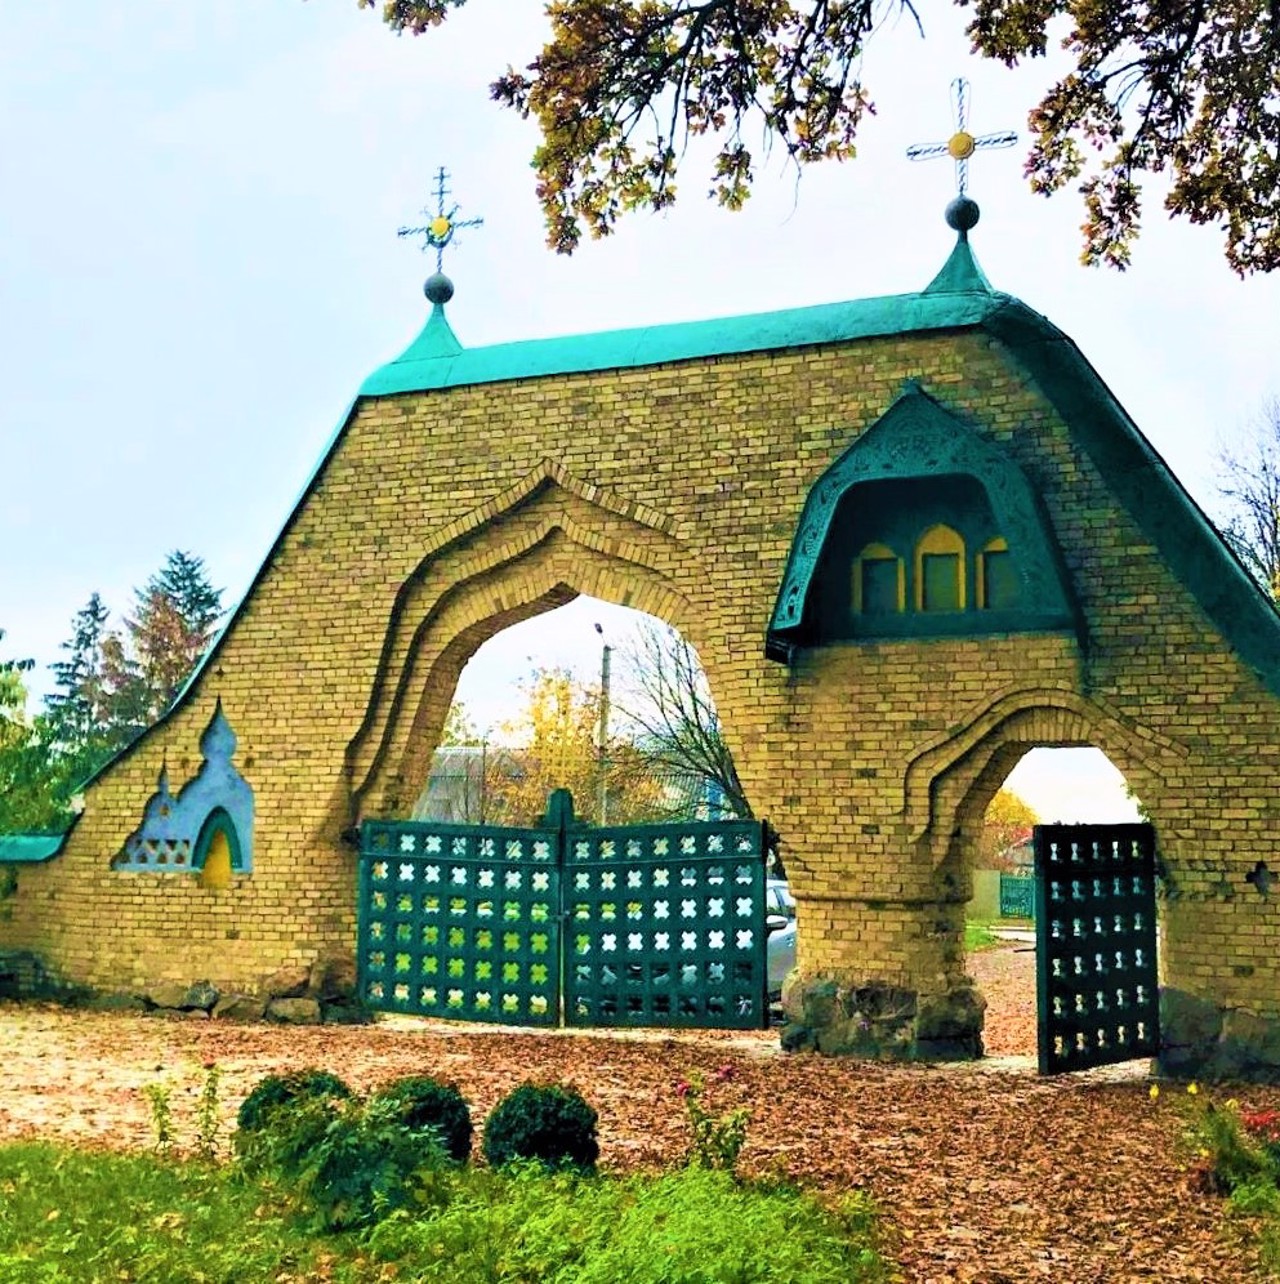 Intercession Church, Parkhomivka